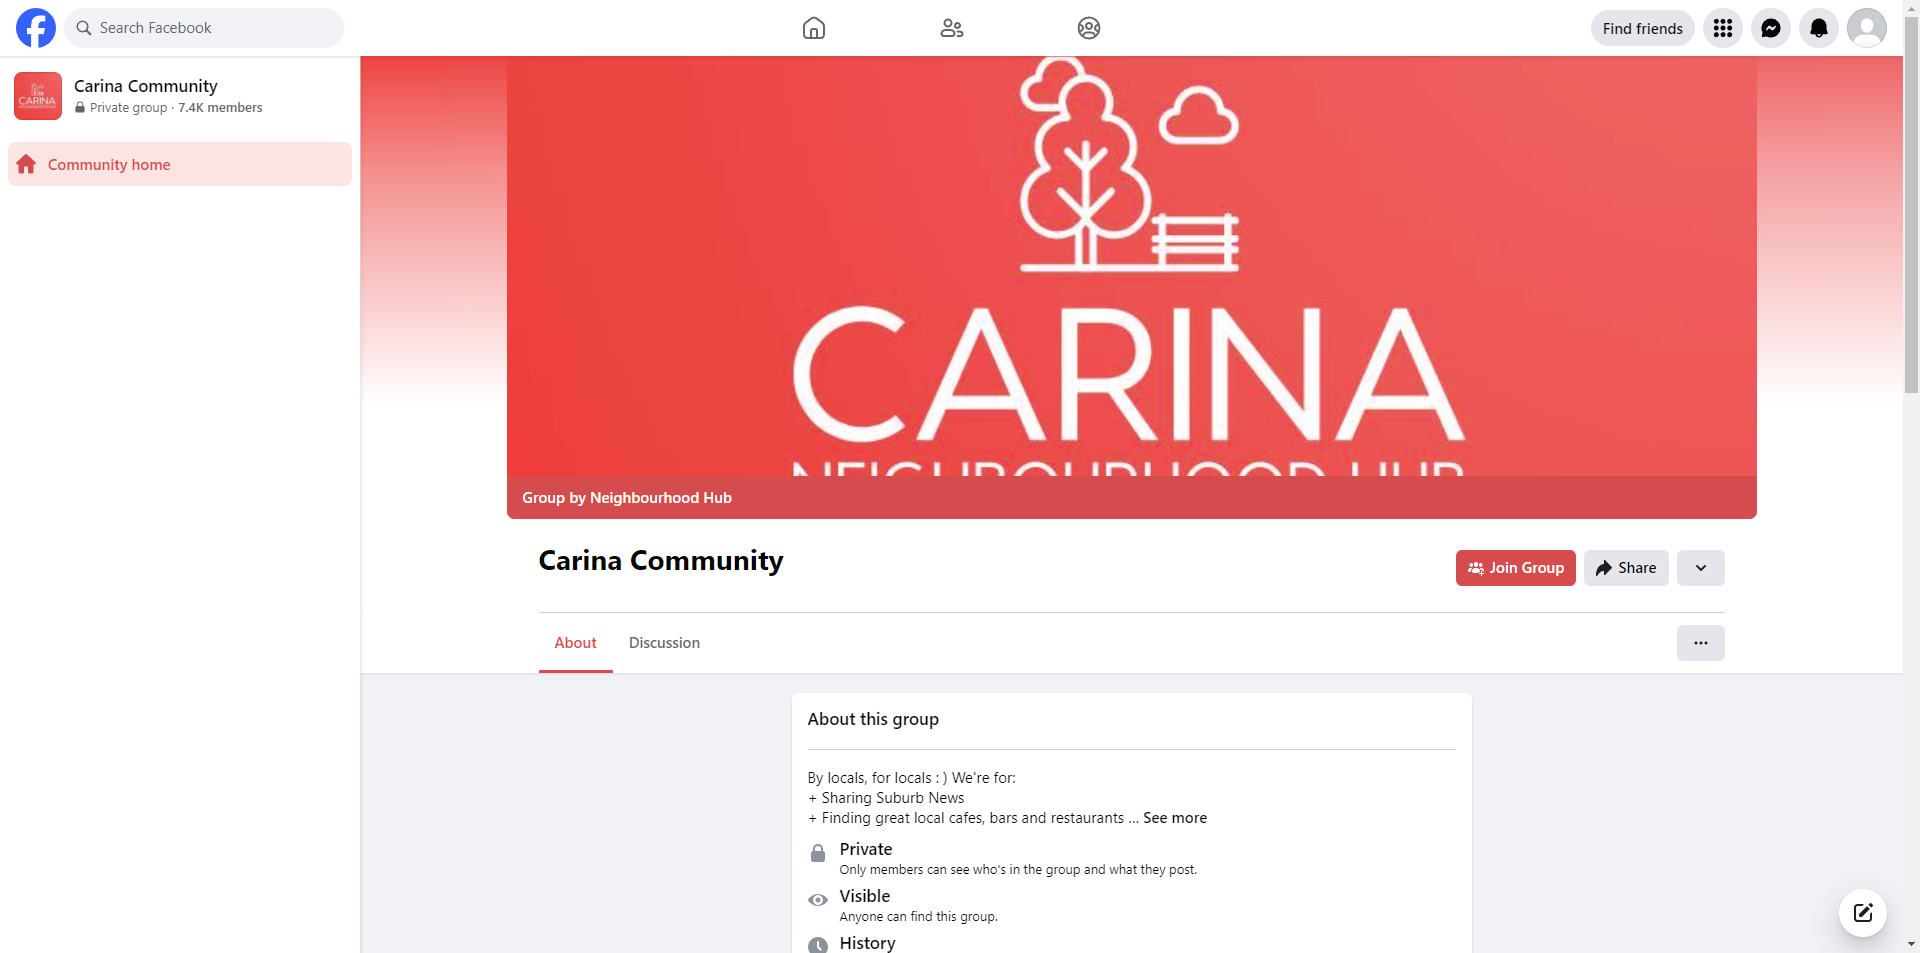 Carina Community